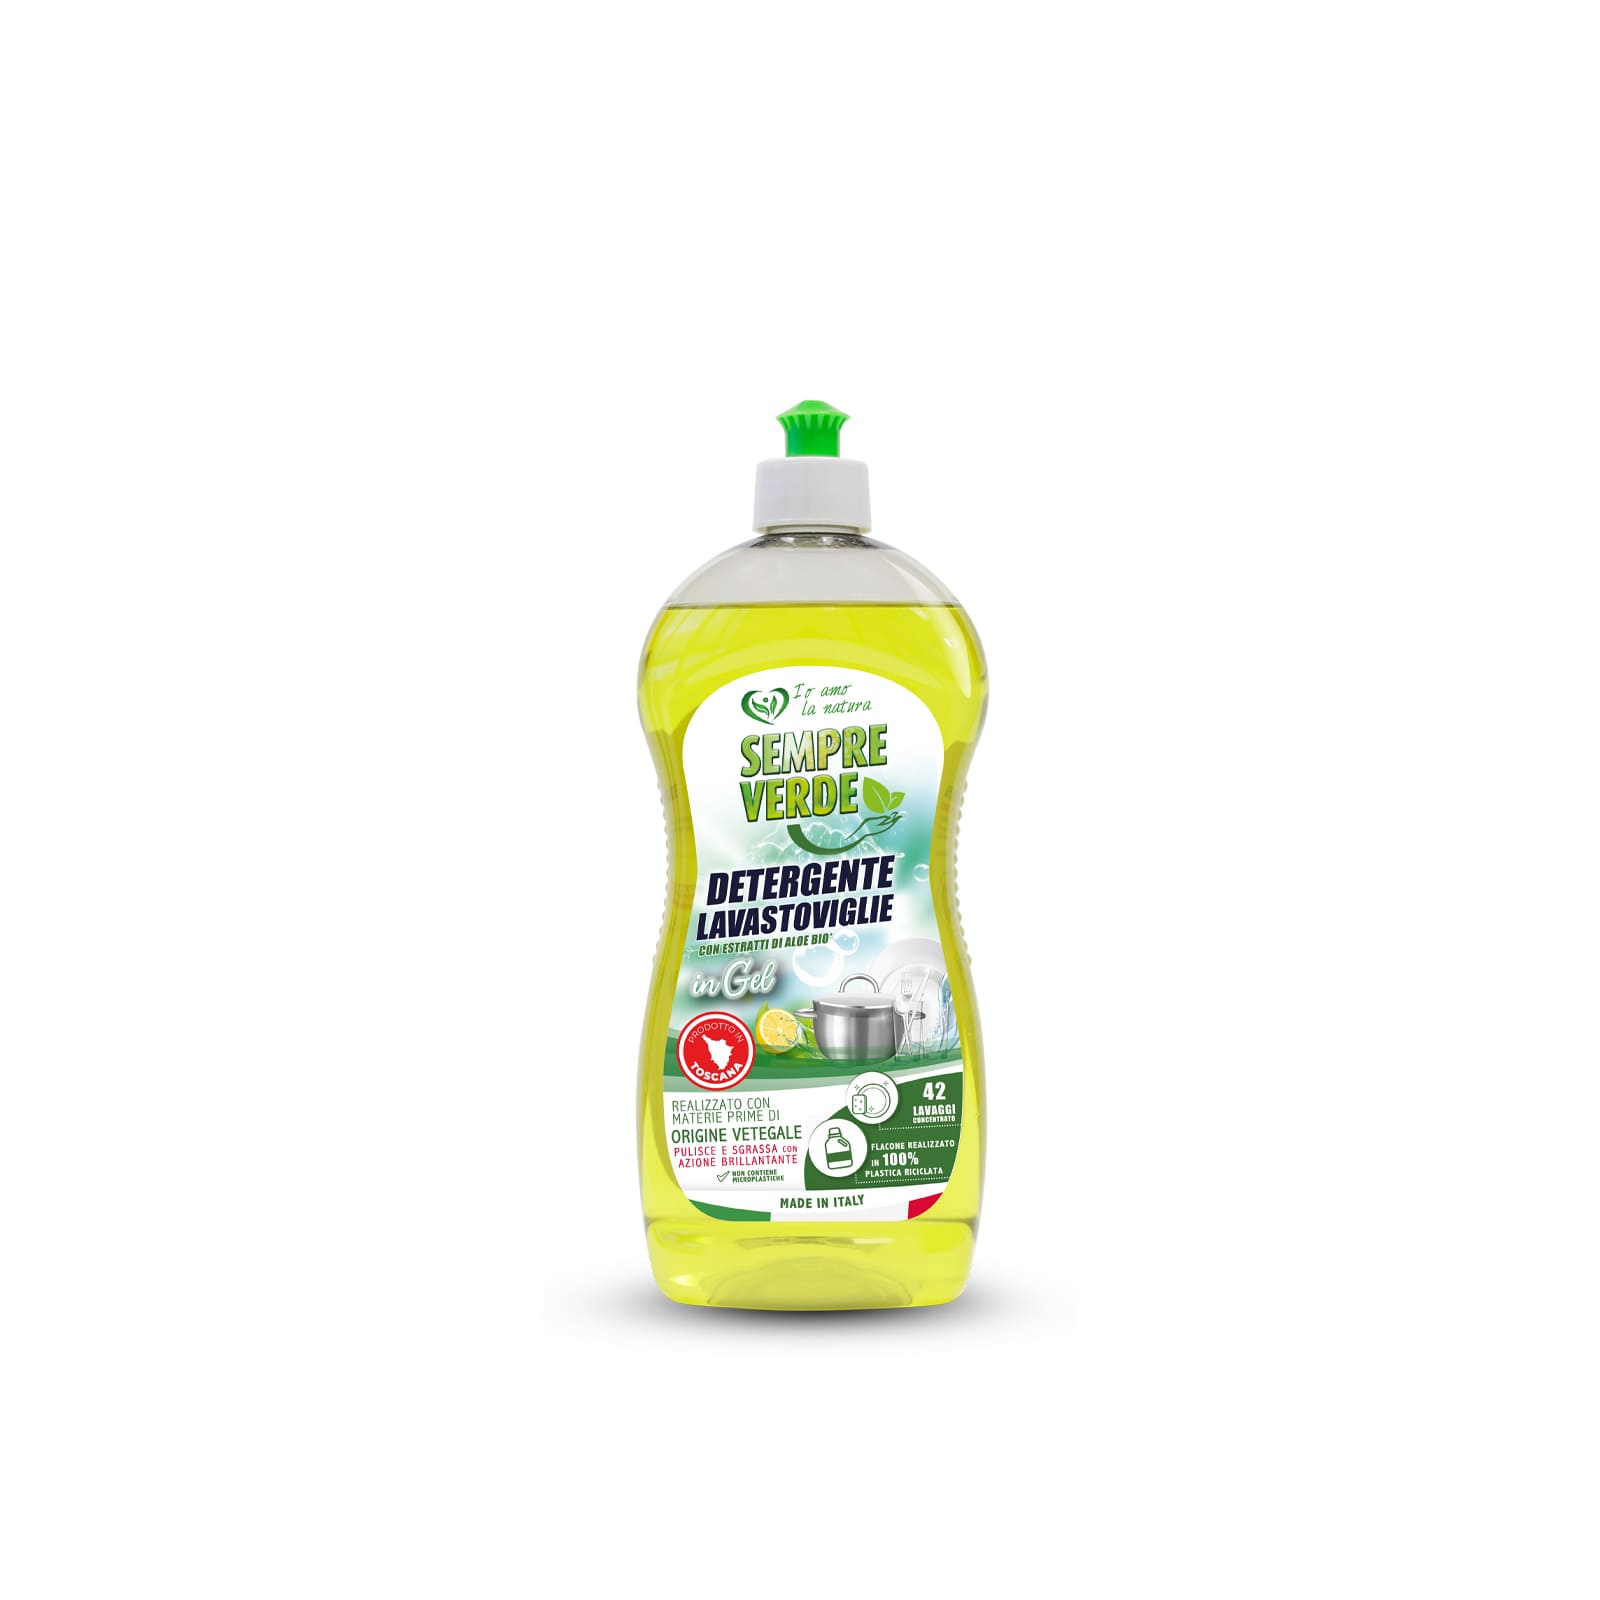 Evergreen gel dishwasher detergent - Lemon